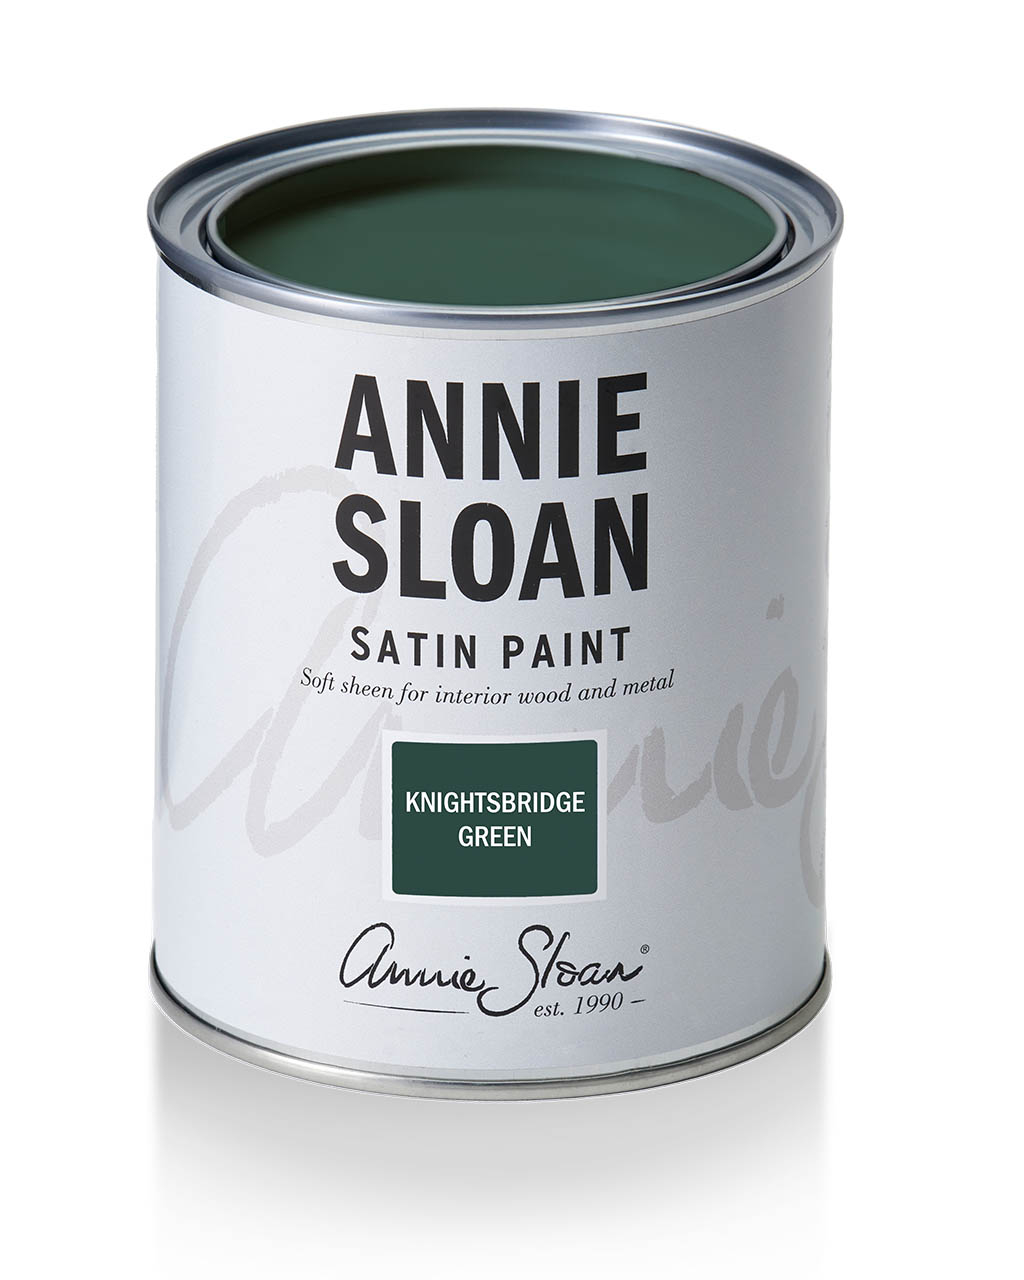 Knightsbridge Green Satin Paint by Annie Sloan - tin shot